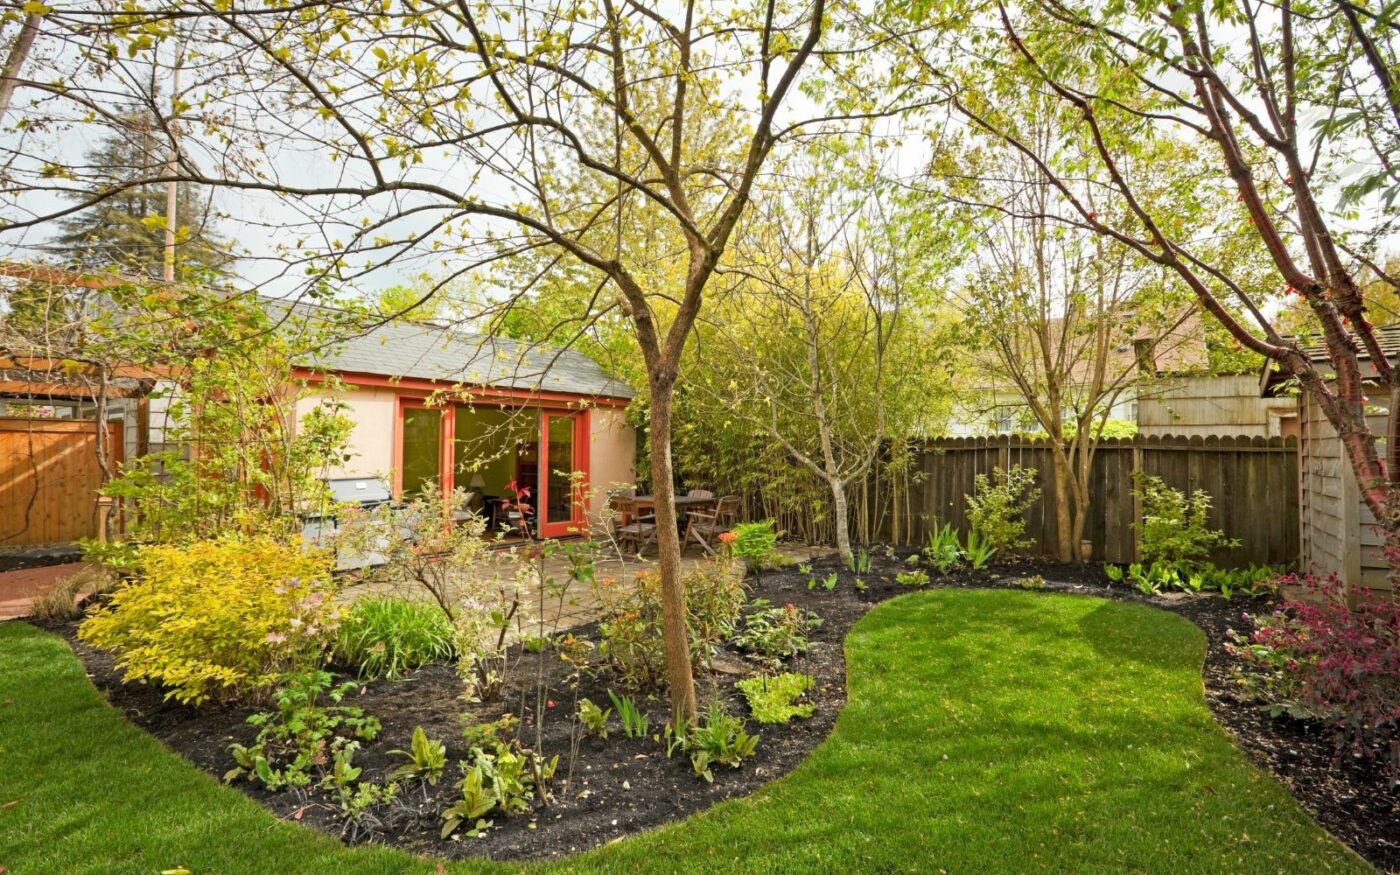 Garden Shed Ideas- Porch or Deck